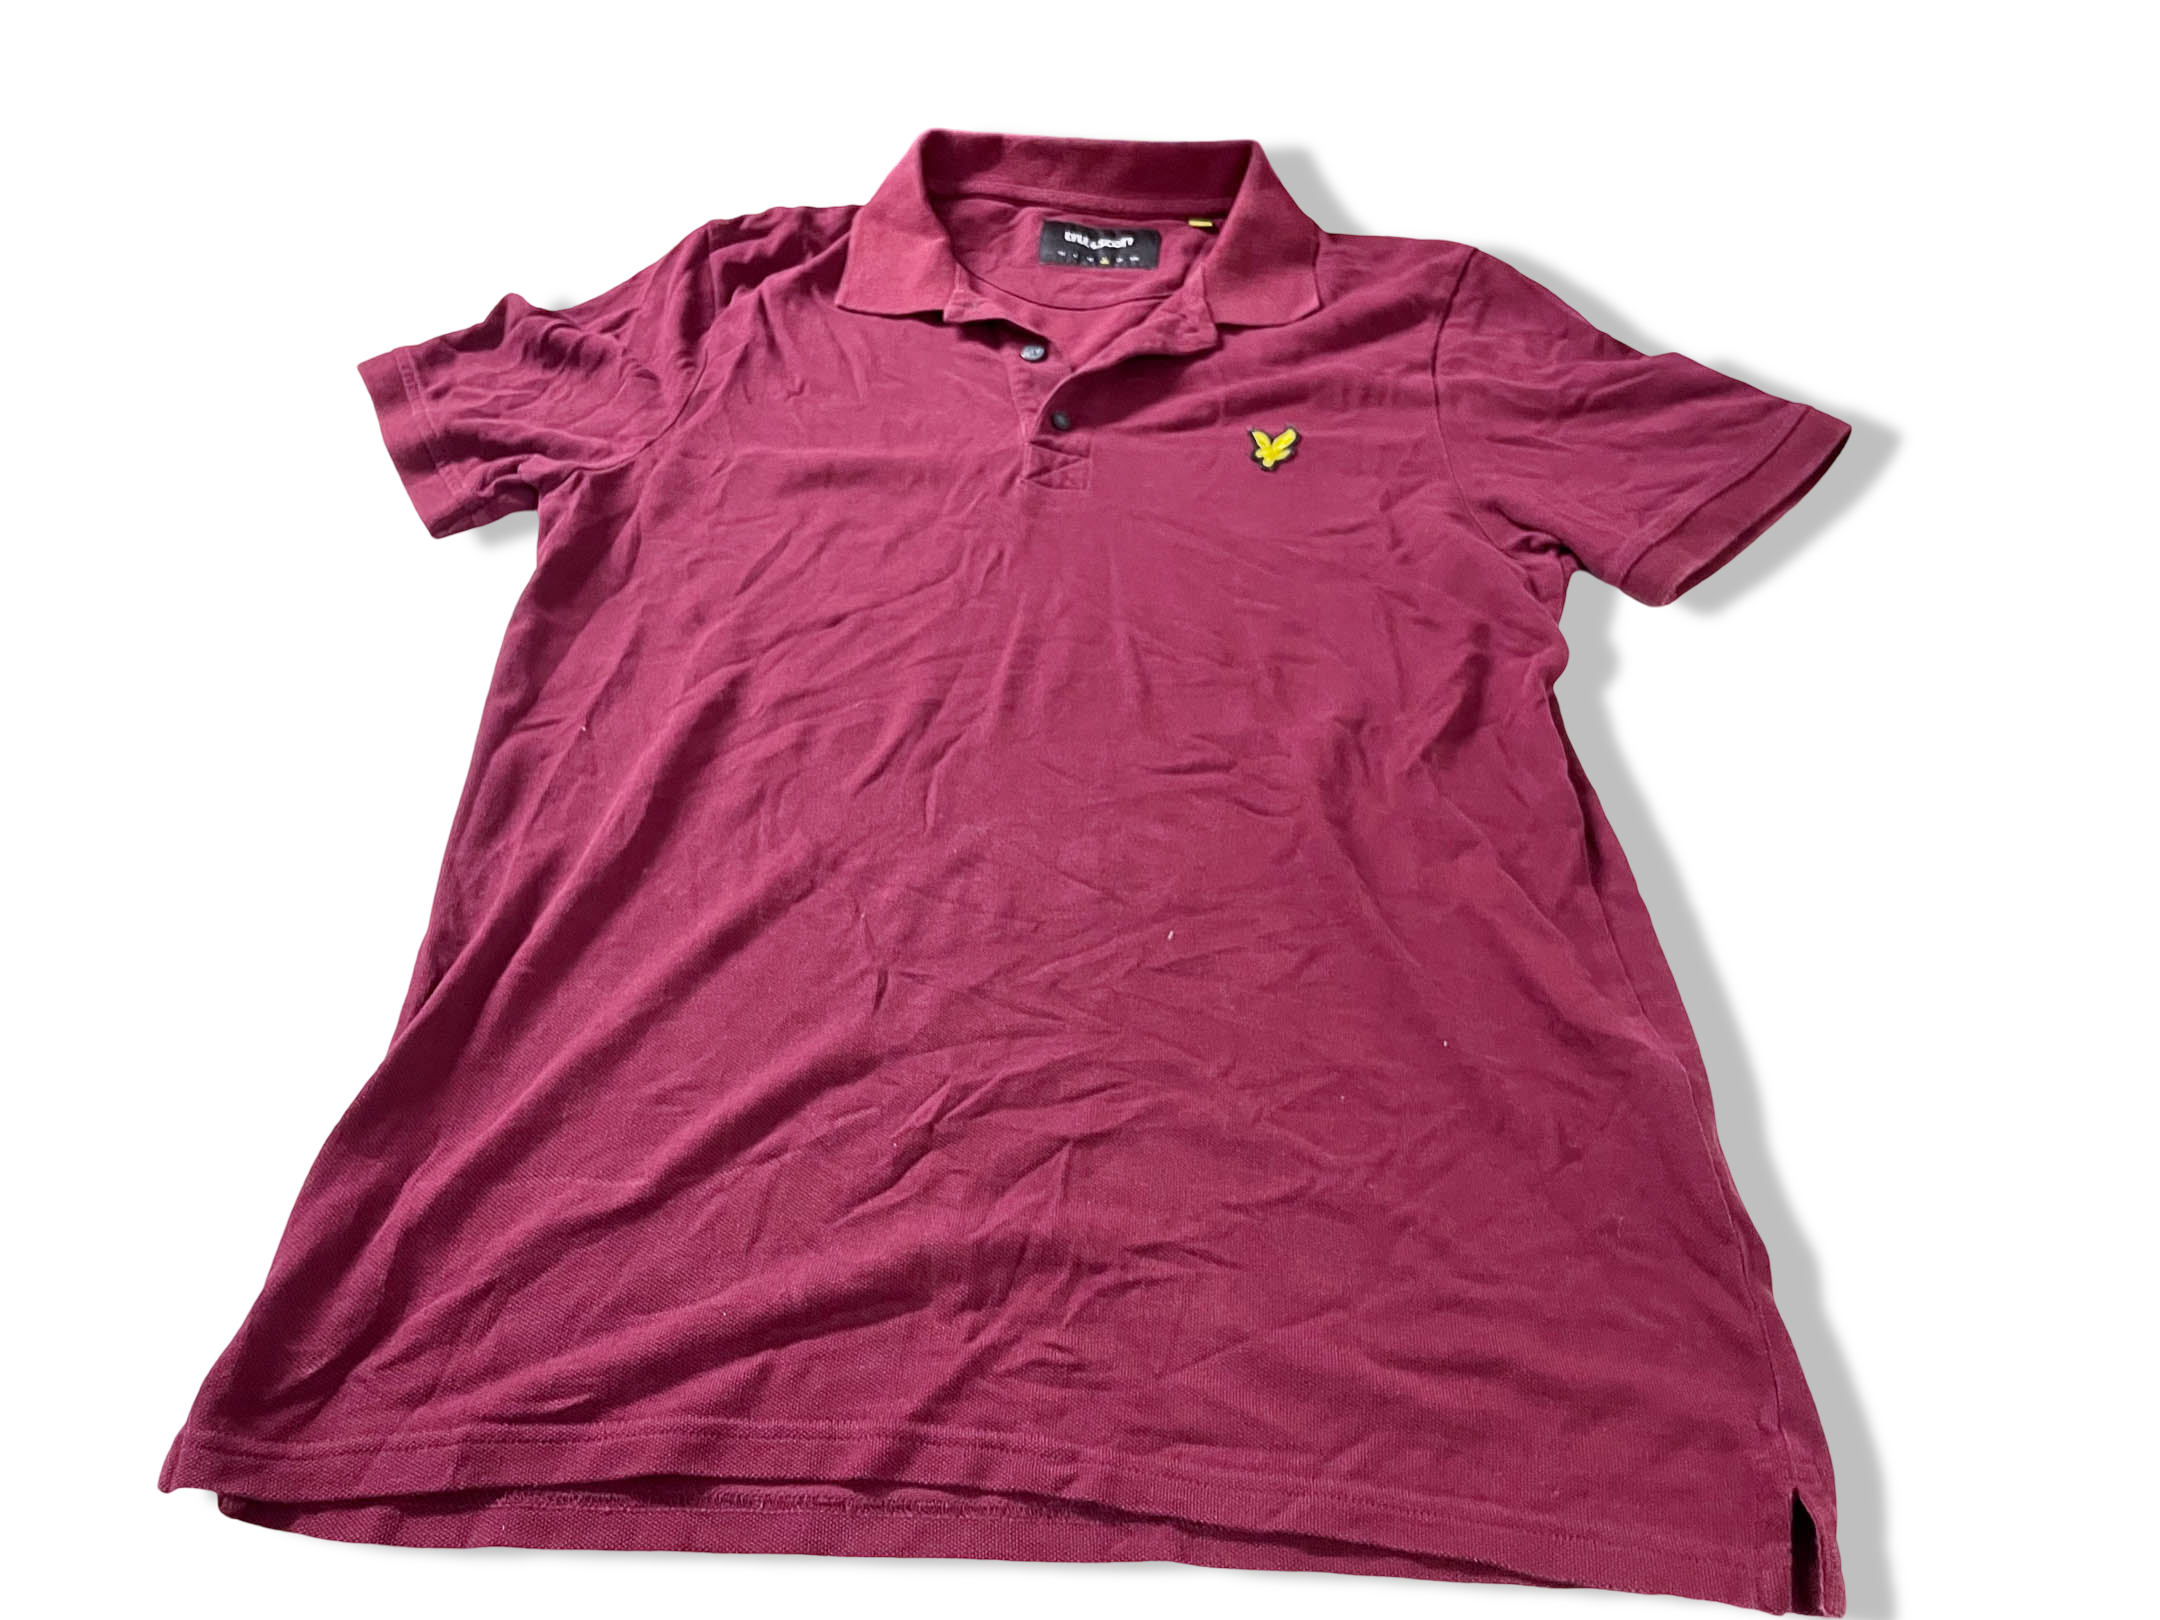 Vintage Men's Lyle & Scott brown oversize short sleeve polo shirt in XXL|L31 W19| SKU 4104